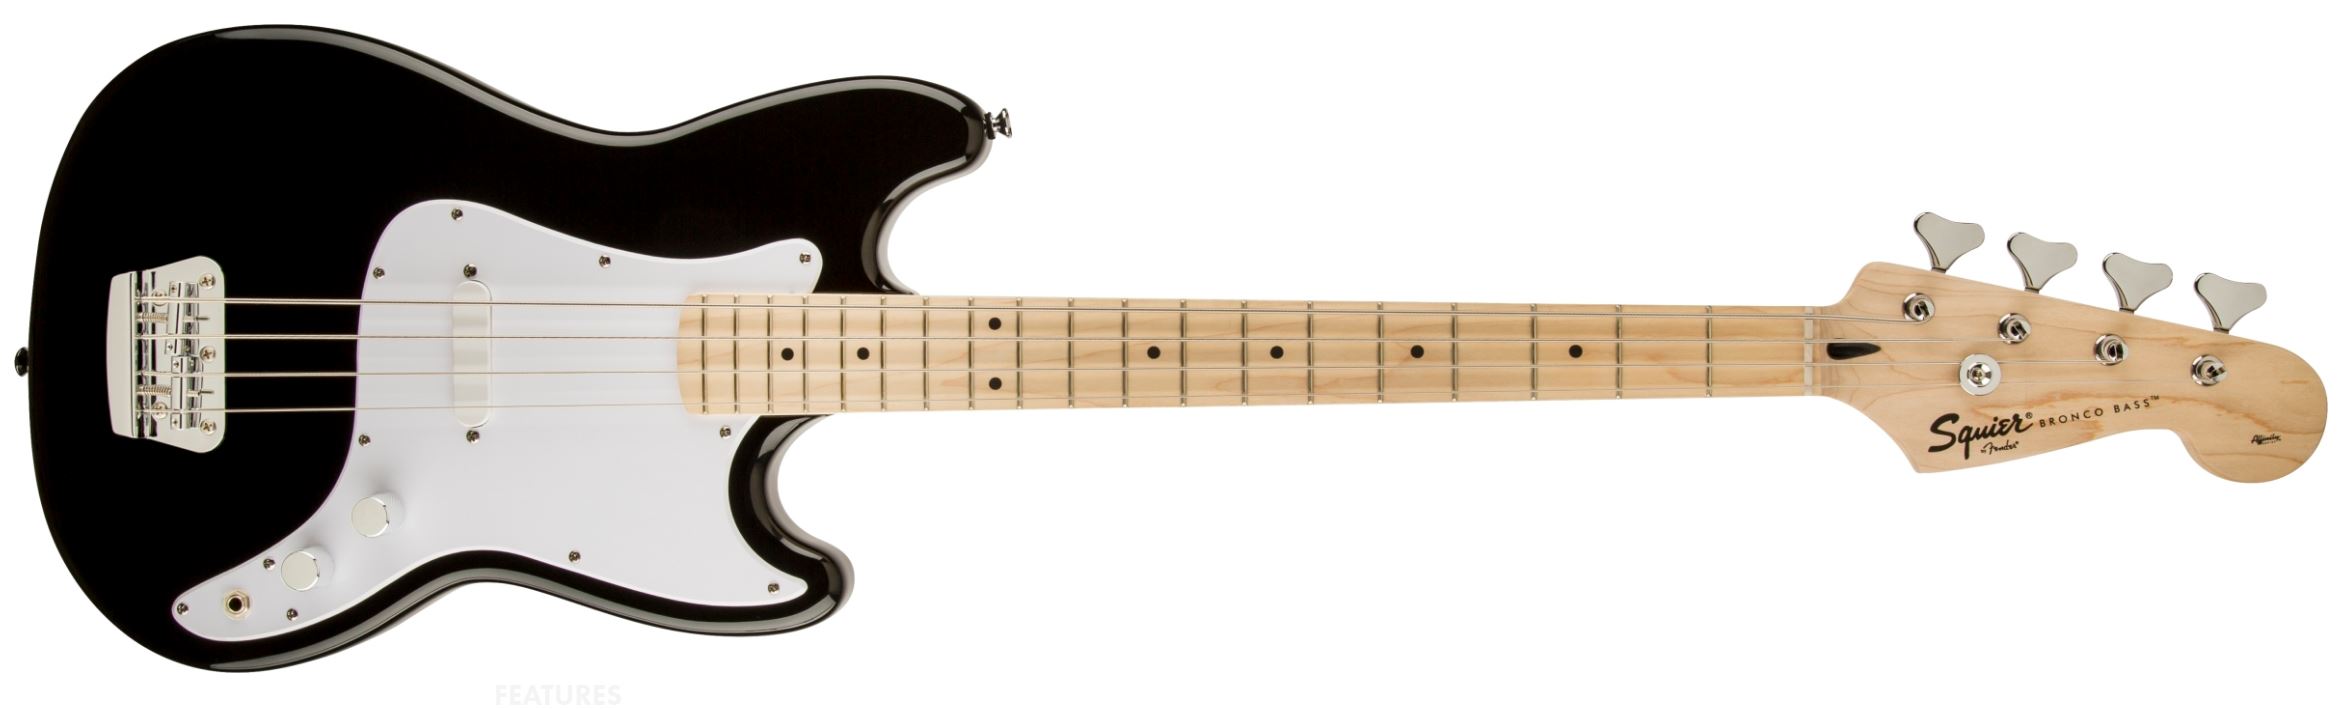 Squier Bronco Bass Guitar